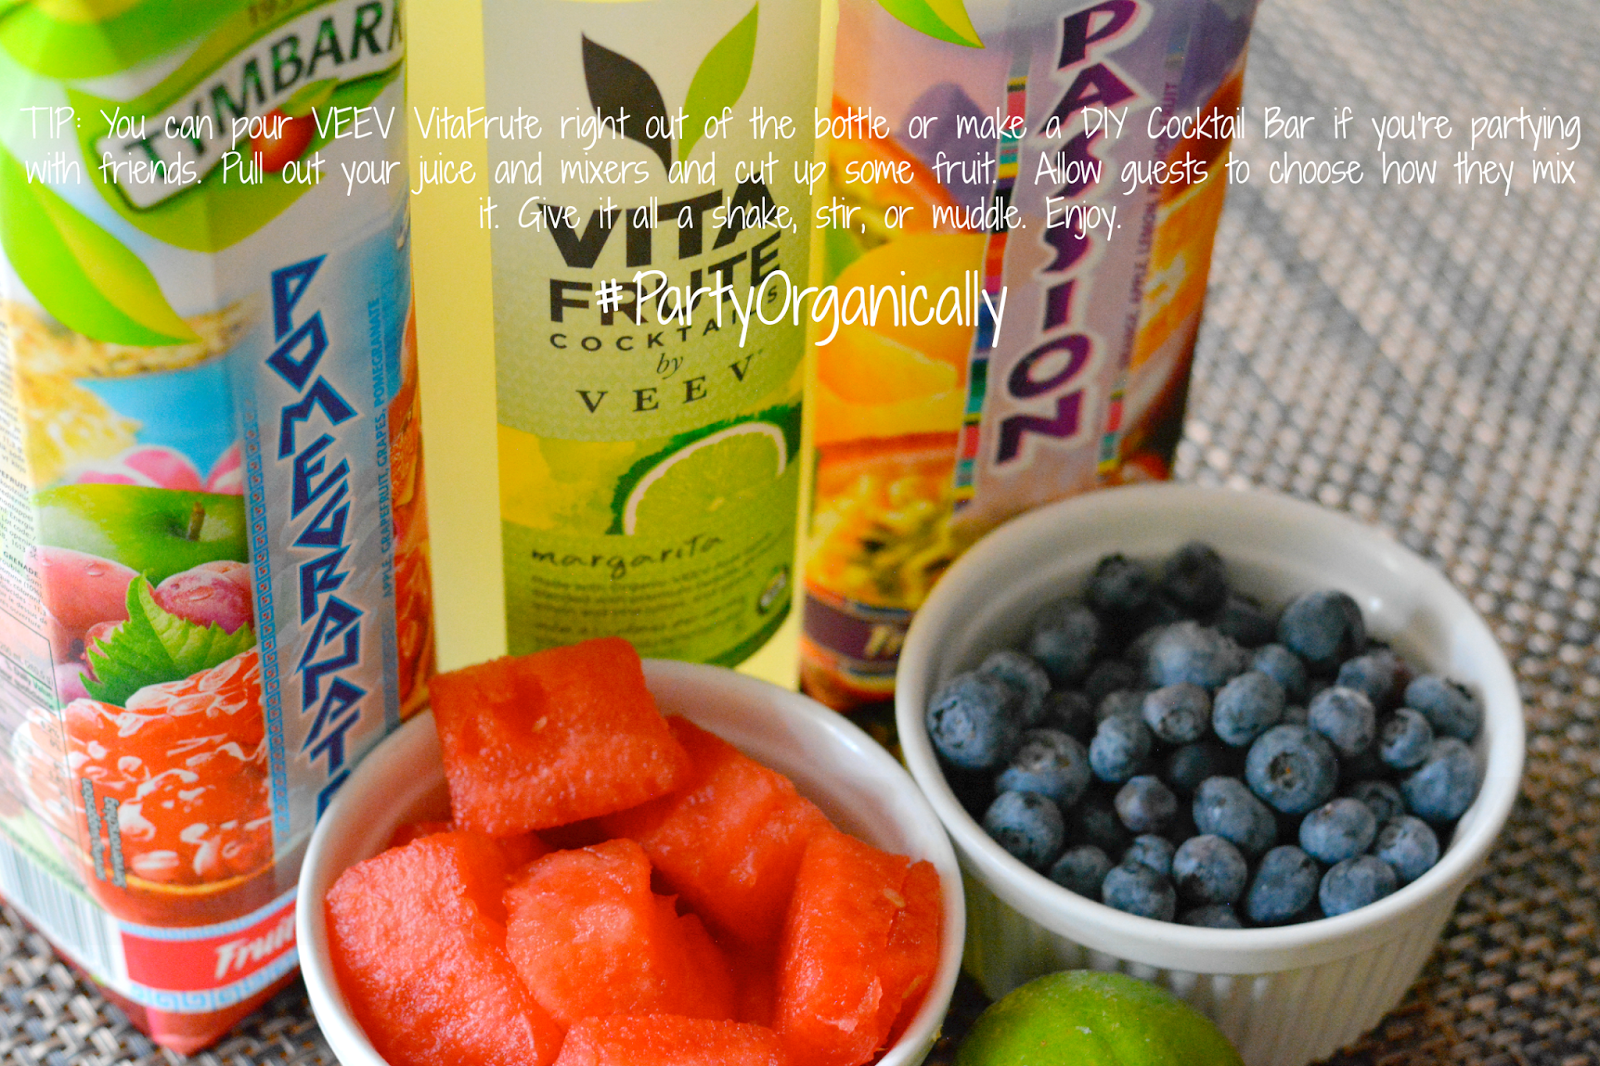 veev vitafrute cocktails #partyorganically pinterest